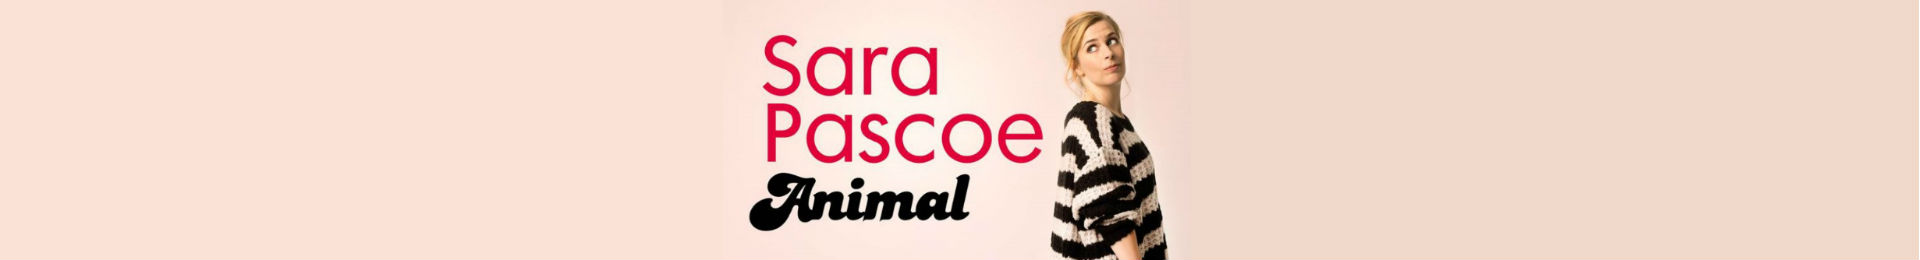 Sara Pascoe - Animal Tickets - Plays Tickets | London Theatre Direct